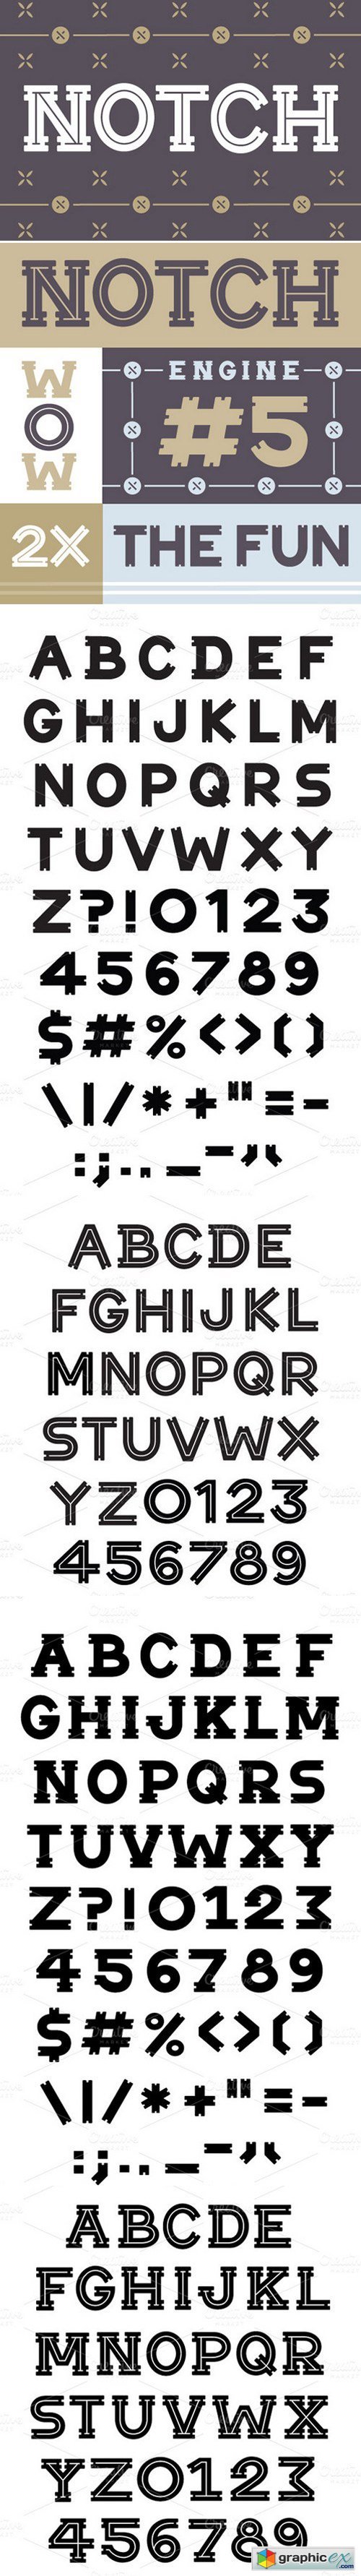 Notch Slab Serif Fonts